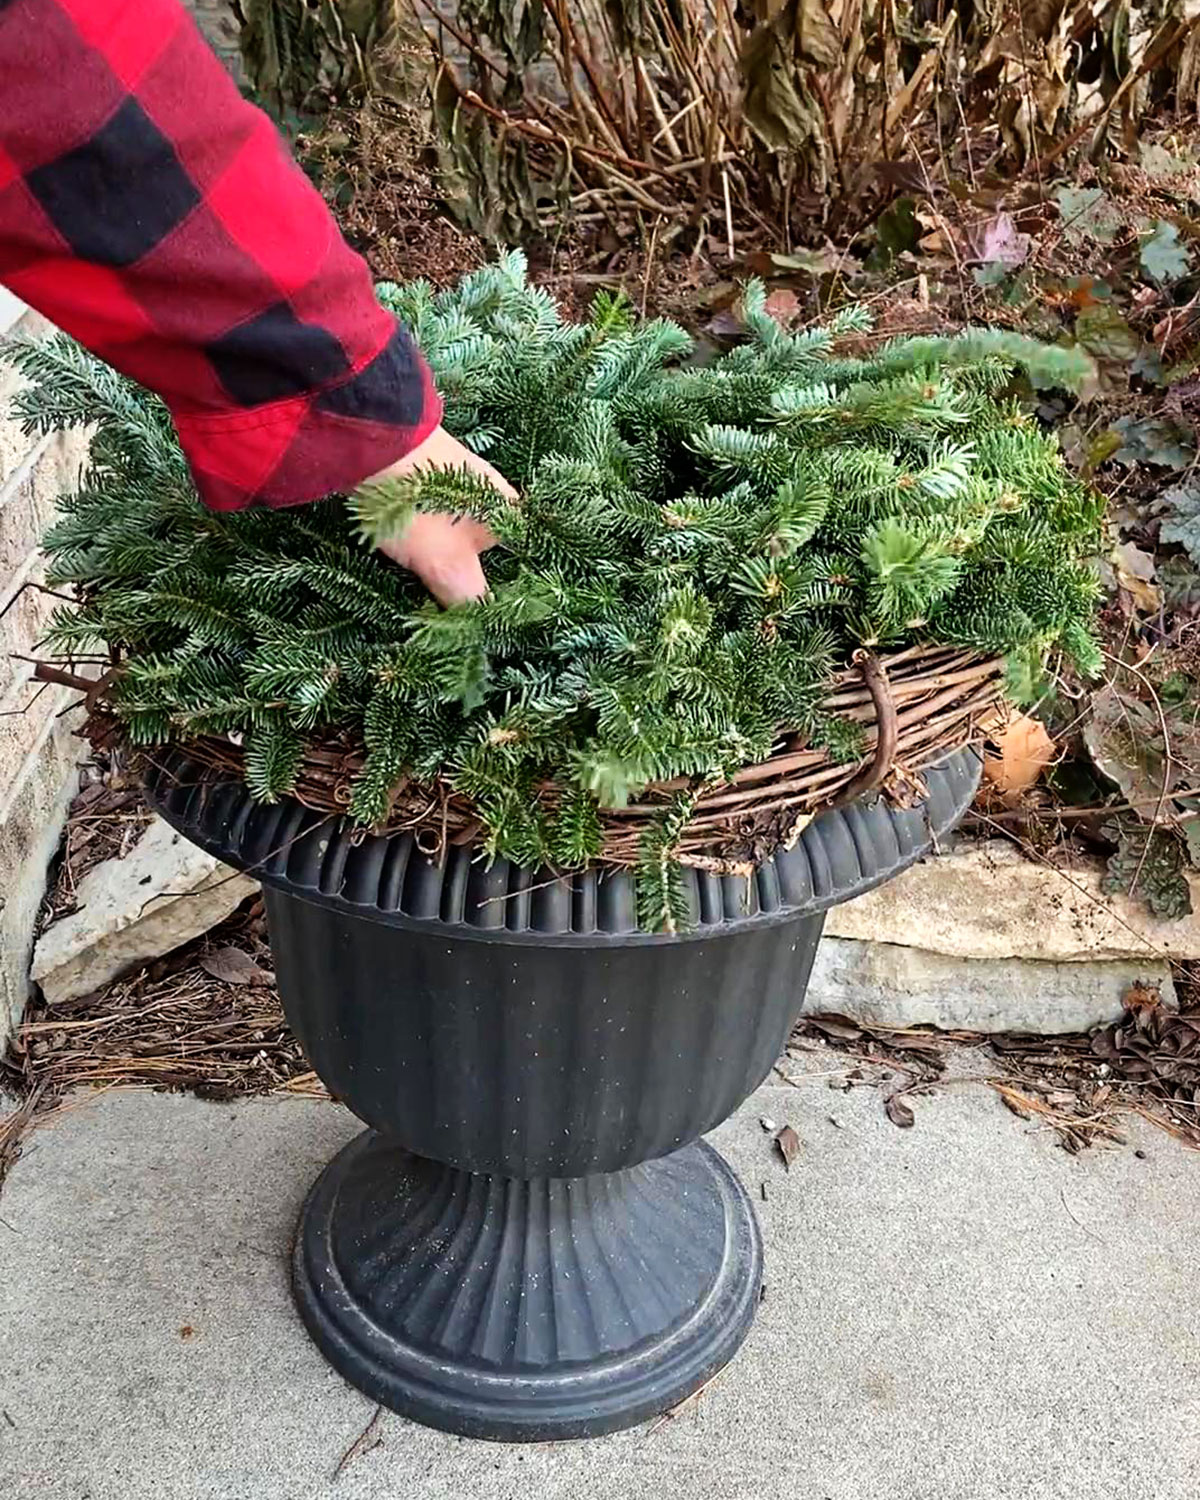 Adding a fresh greens wreath to a winter porch pot.